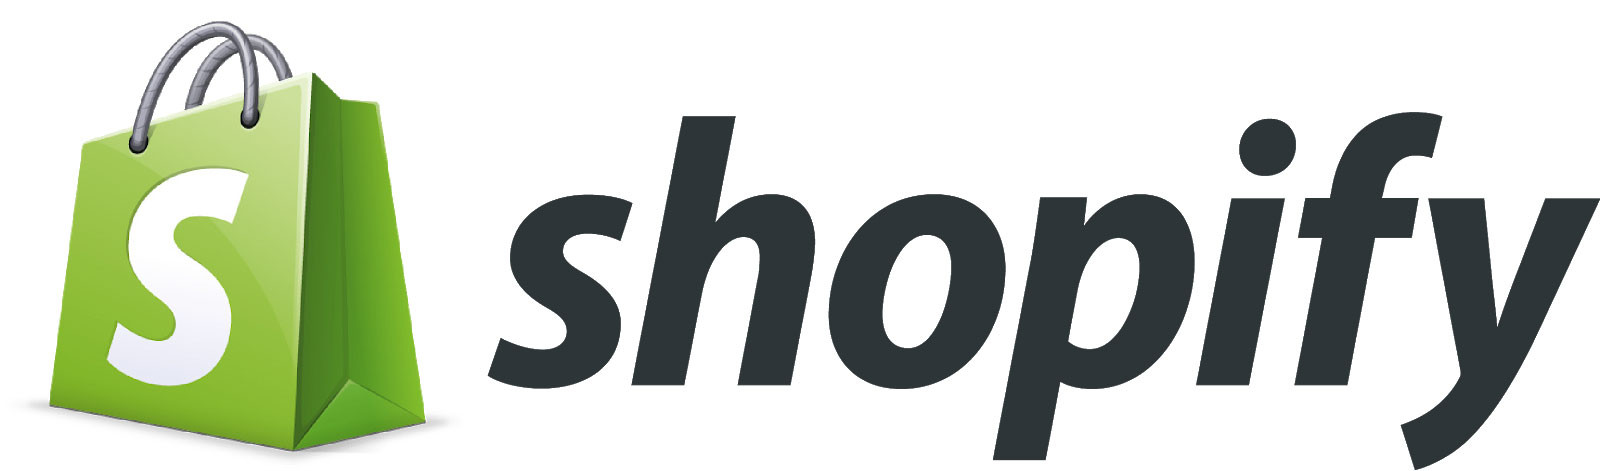 تطوير Shopify أرخص من خدمات تطوير magento